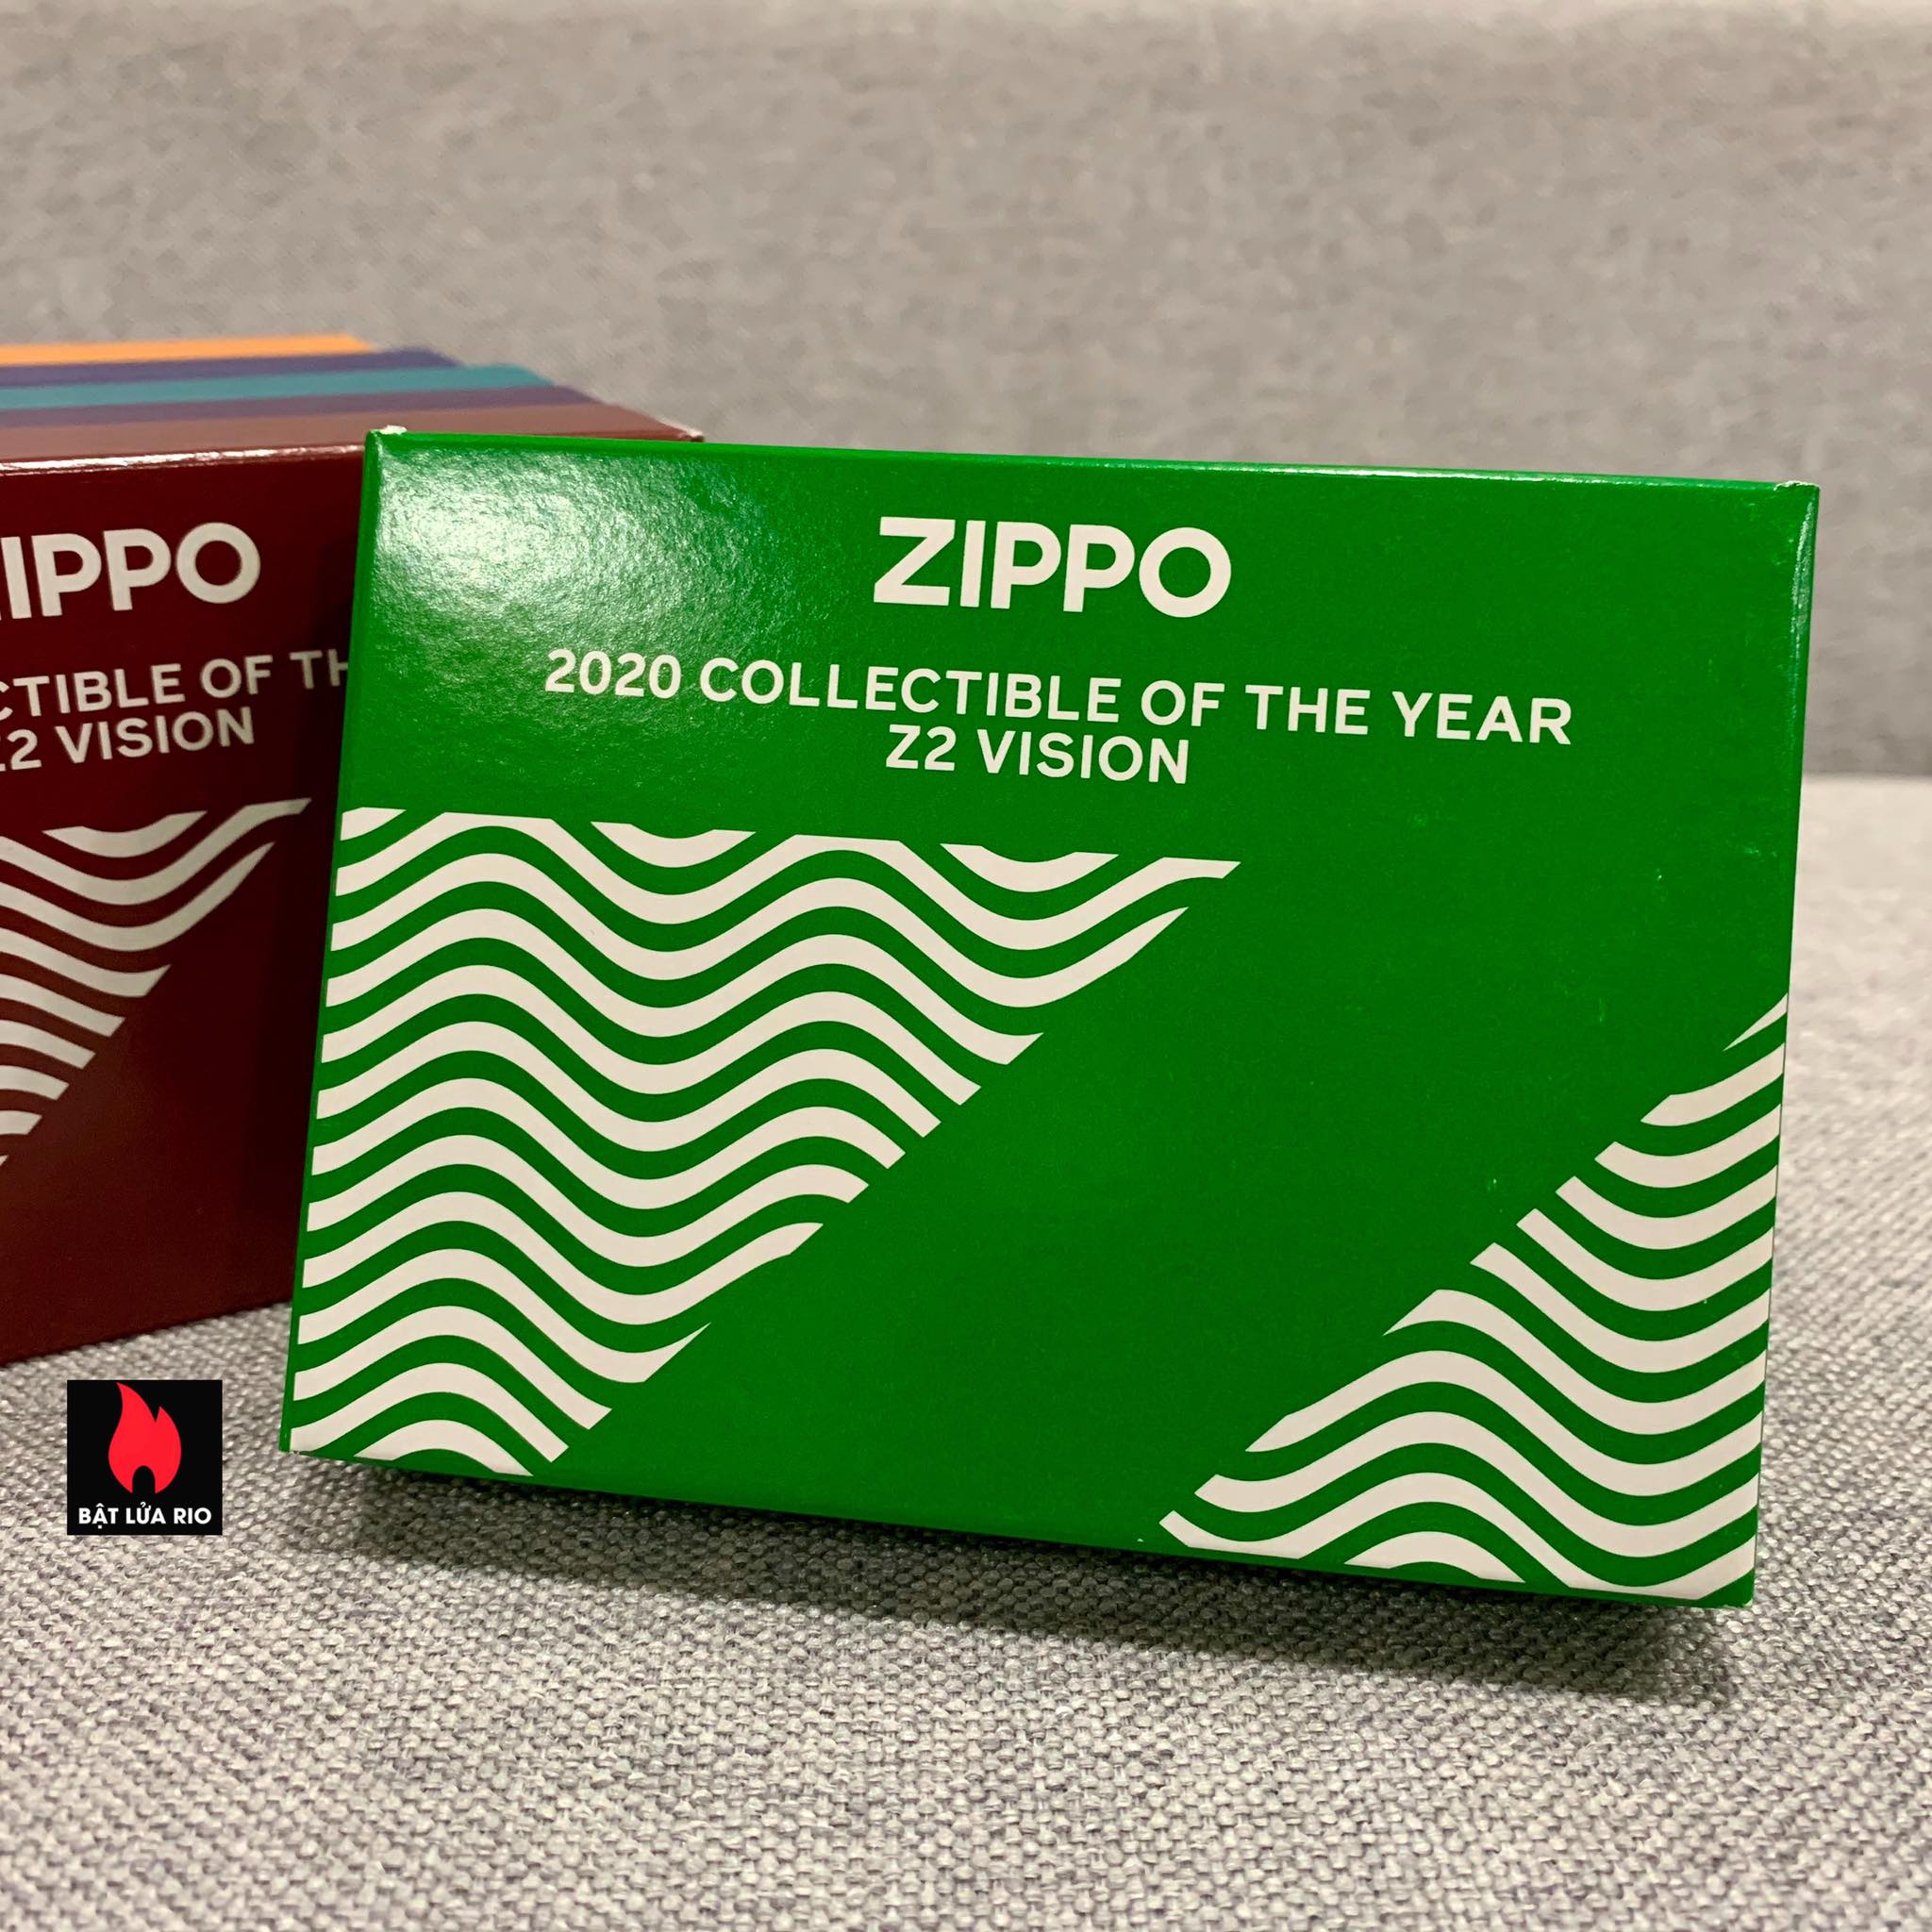 Zippo 49194 - Zippo 2020 Collectible Of The Year - Zippo Coty 2020 - Zippo Z2 Vision 45